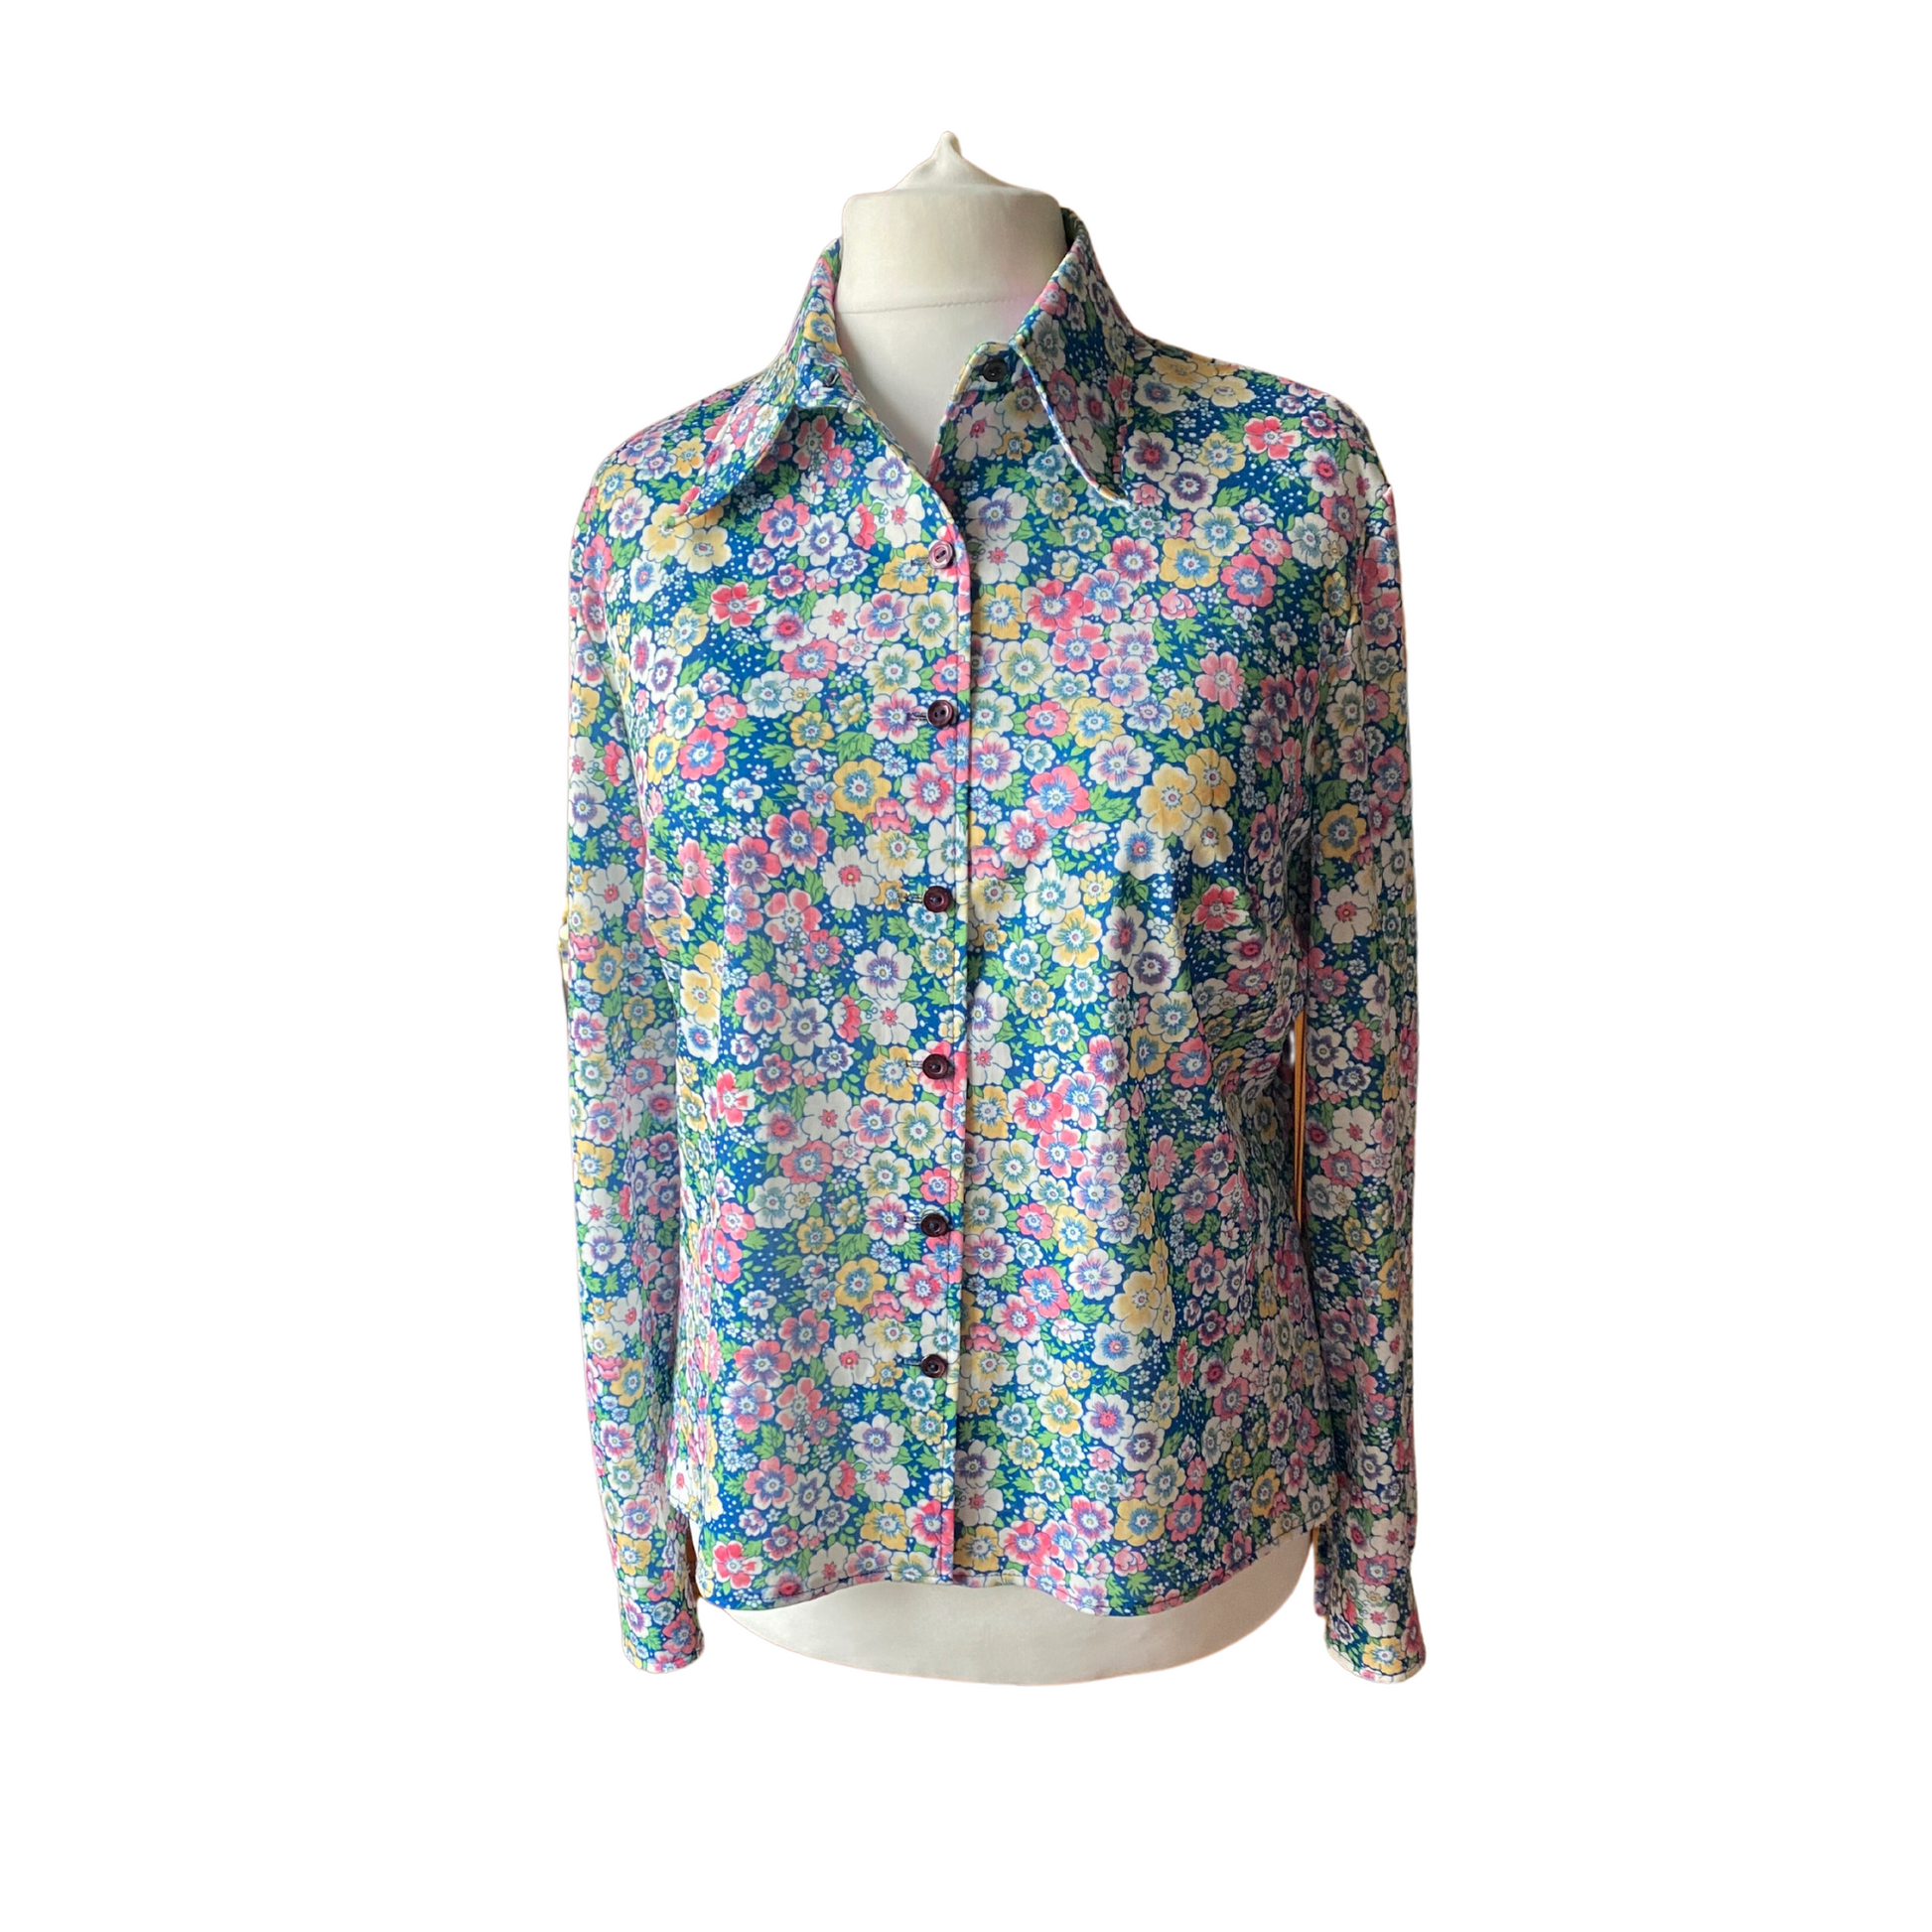 Bright pastel flower print 1960s shirt - retro style